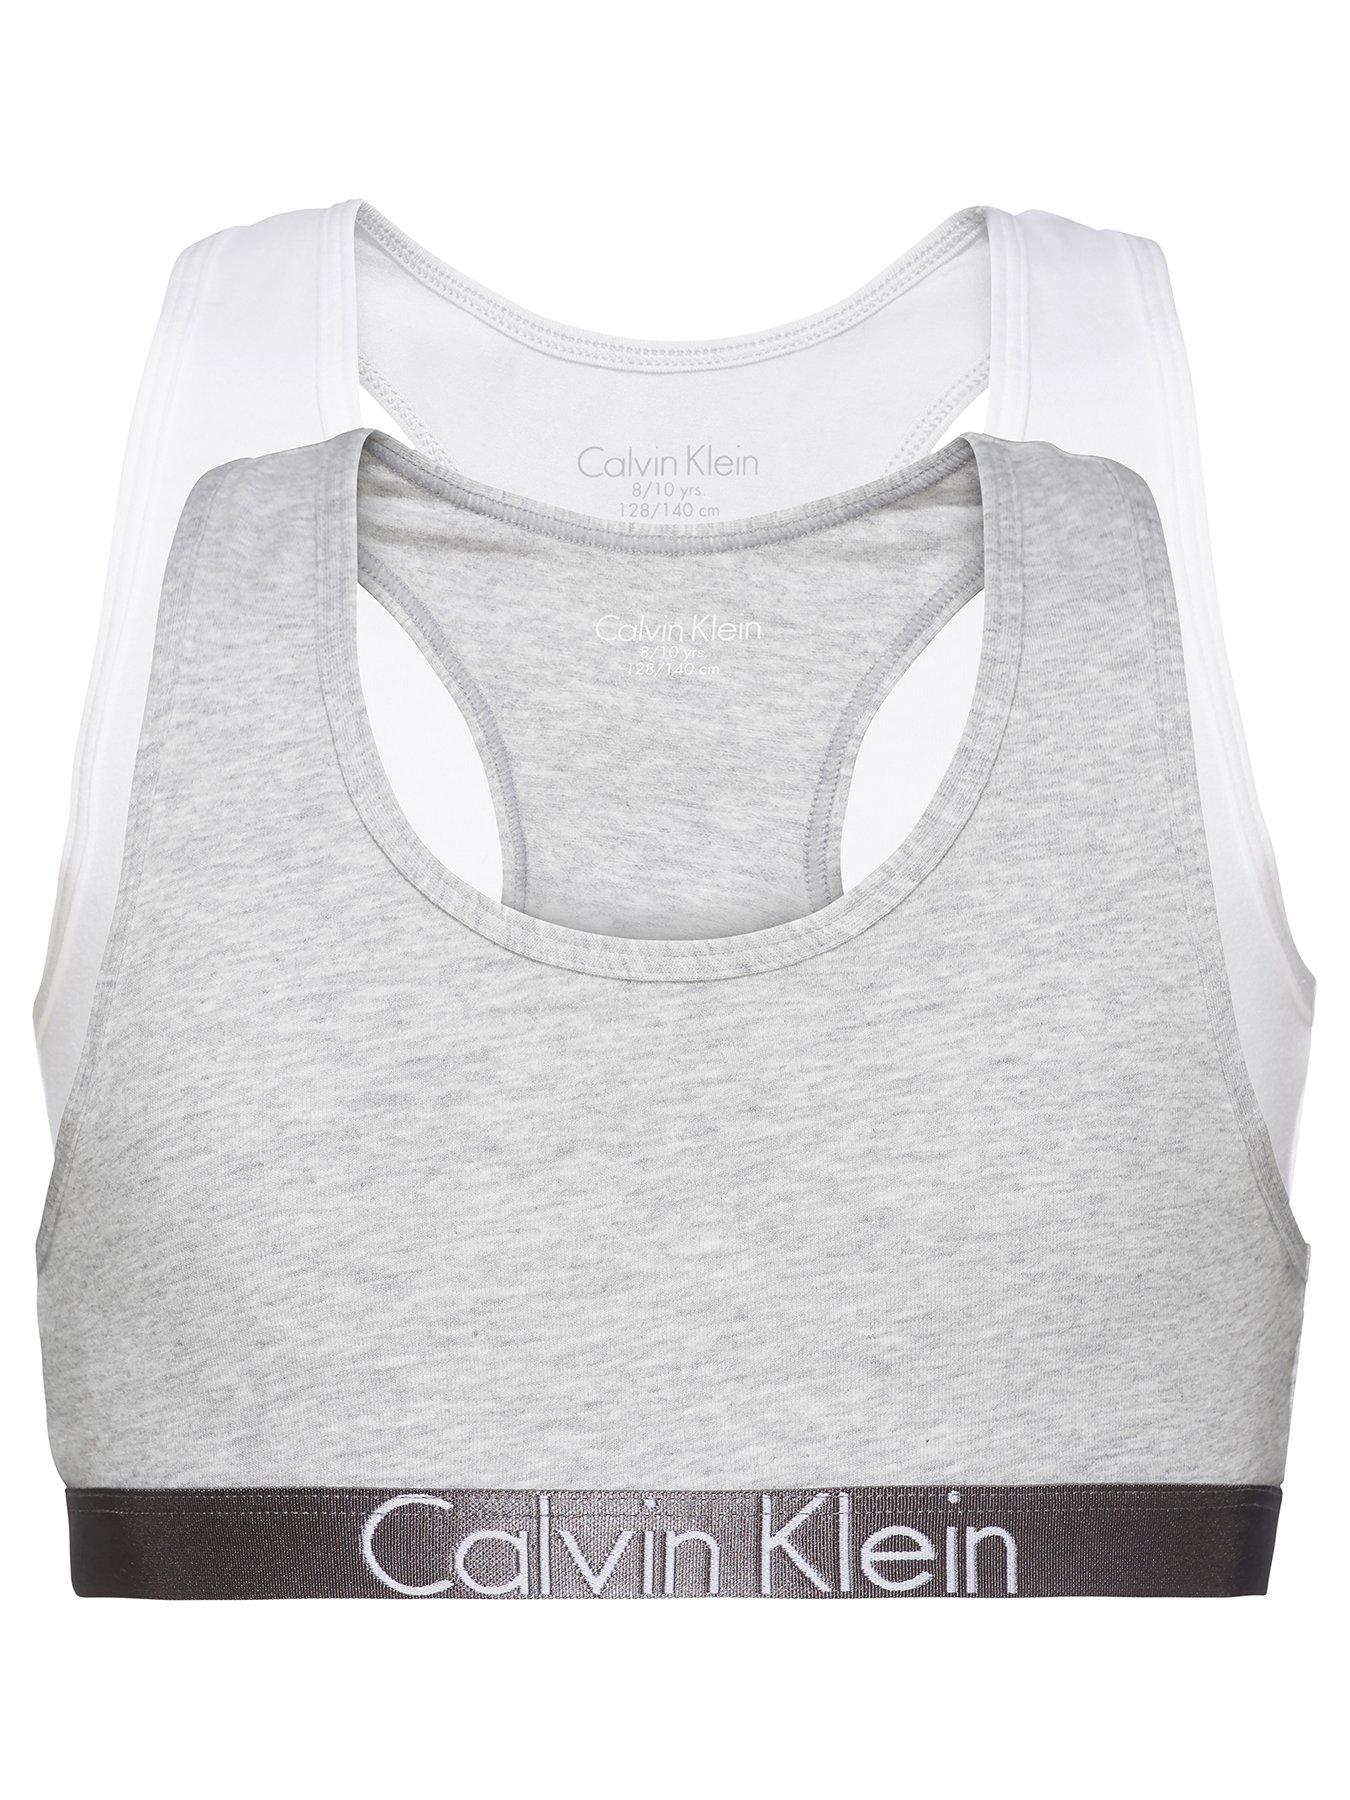 Calvin Klein Girls 2 Pack Bralette - White/Grey